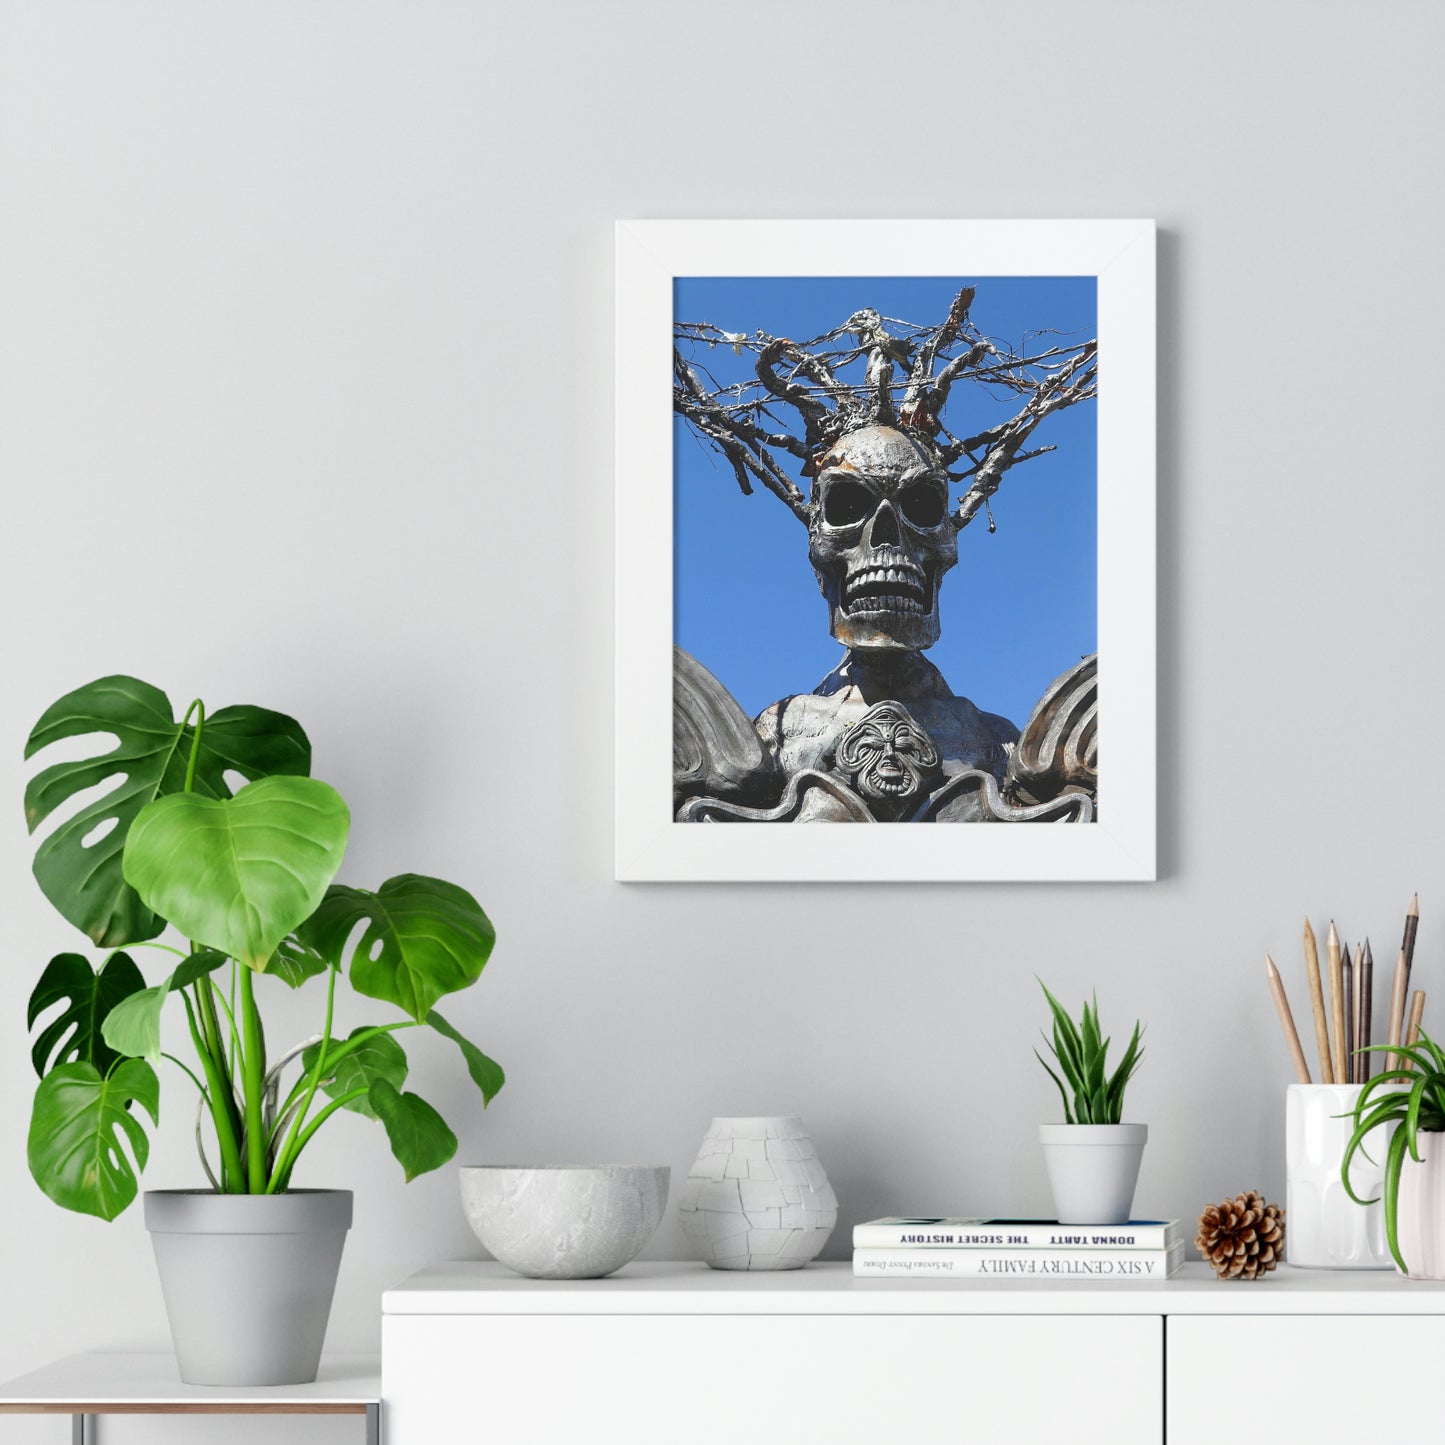 Skull Warrior Stare - Framed Vertical Poster - Fry1Productions